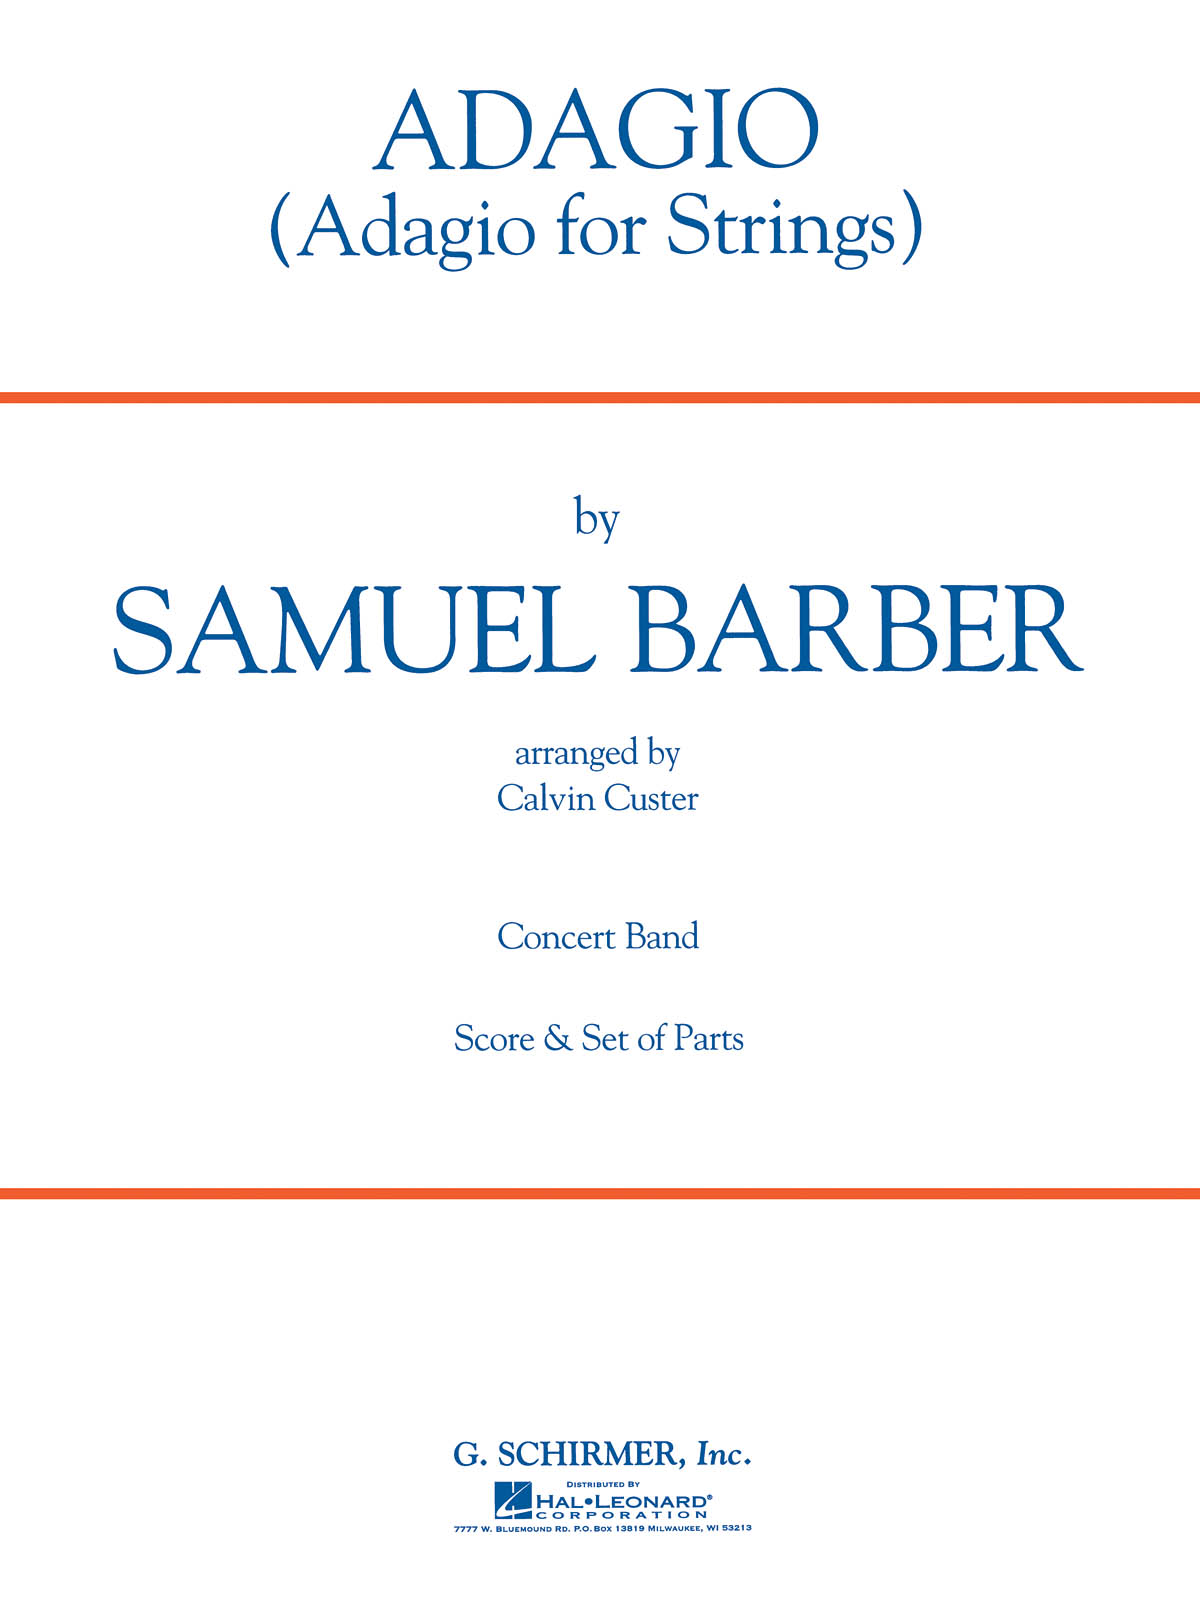 Samuel Barber: Adagio For Strings (Wind Band)